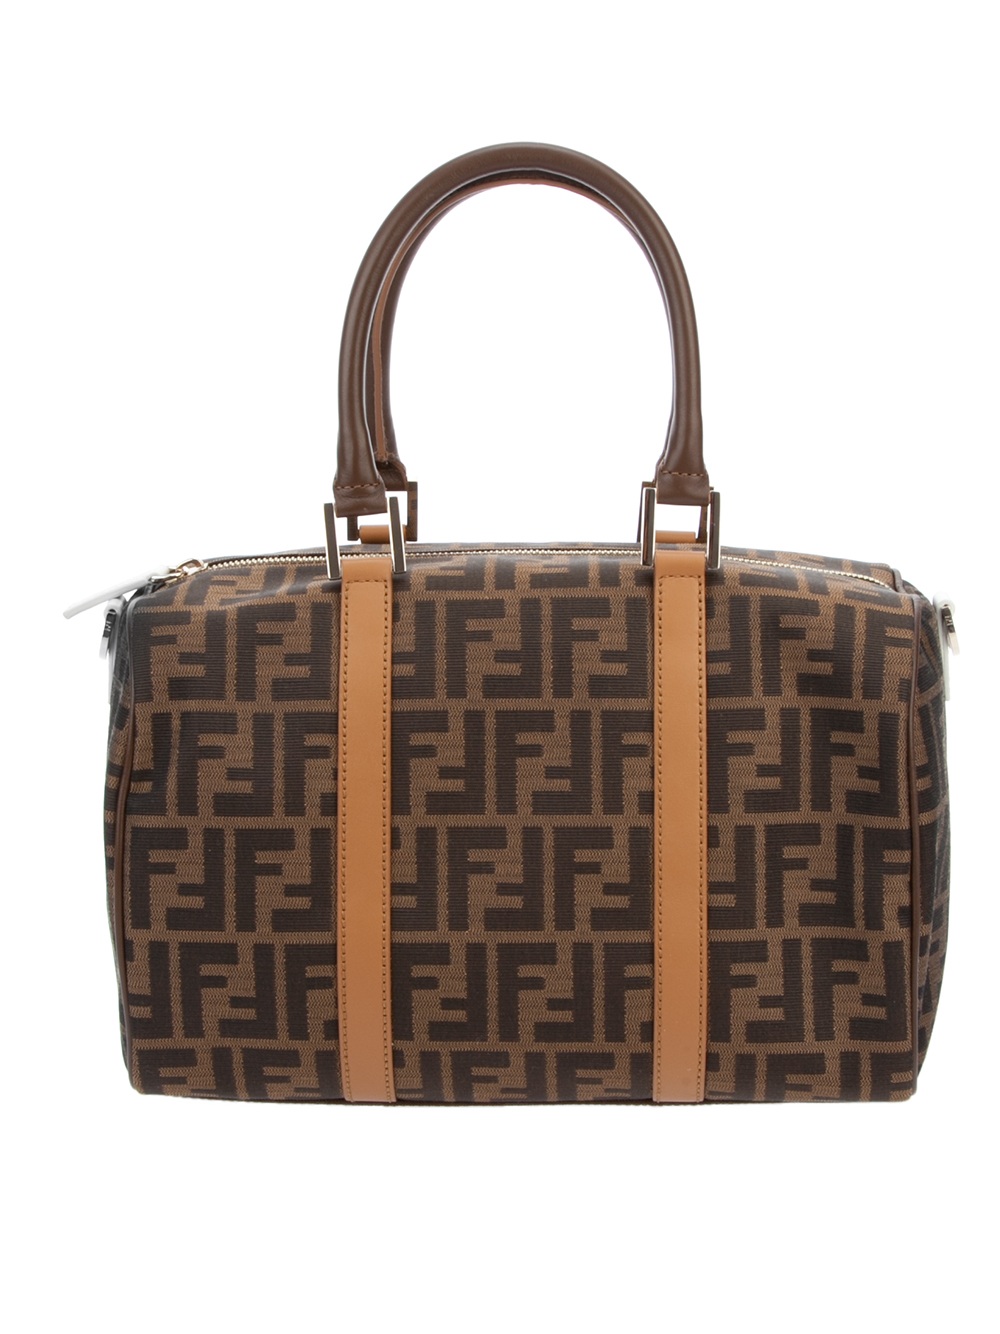 Lyst - Fendi Monogram Bag in Brown